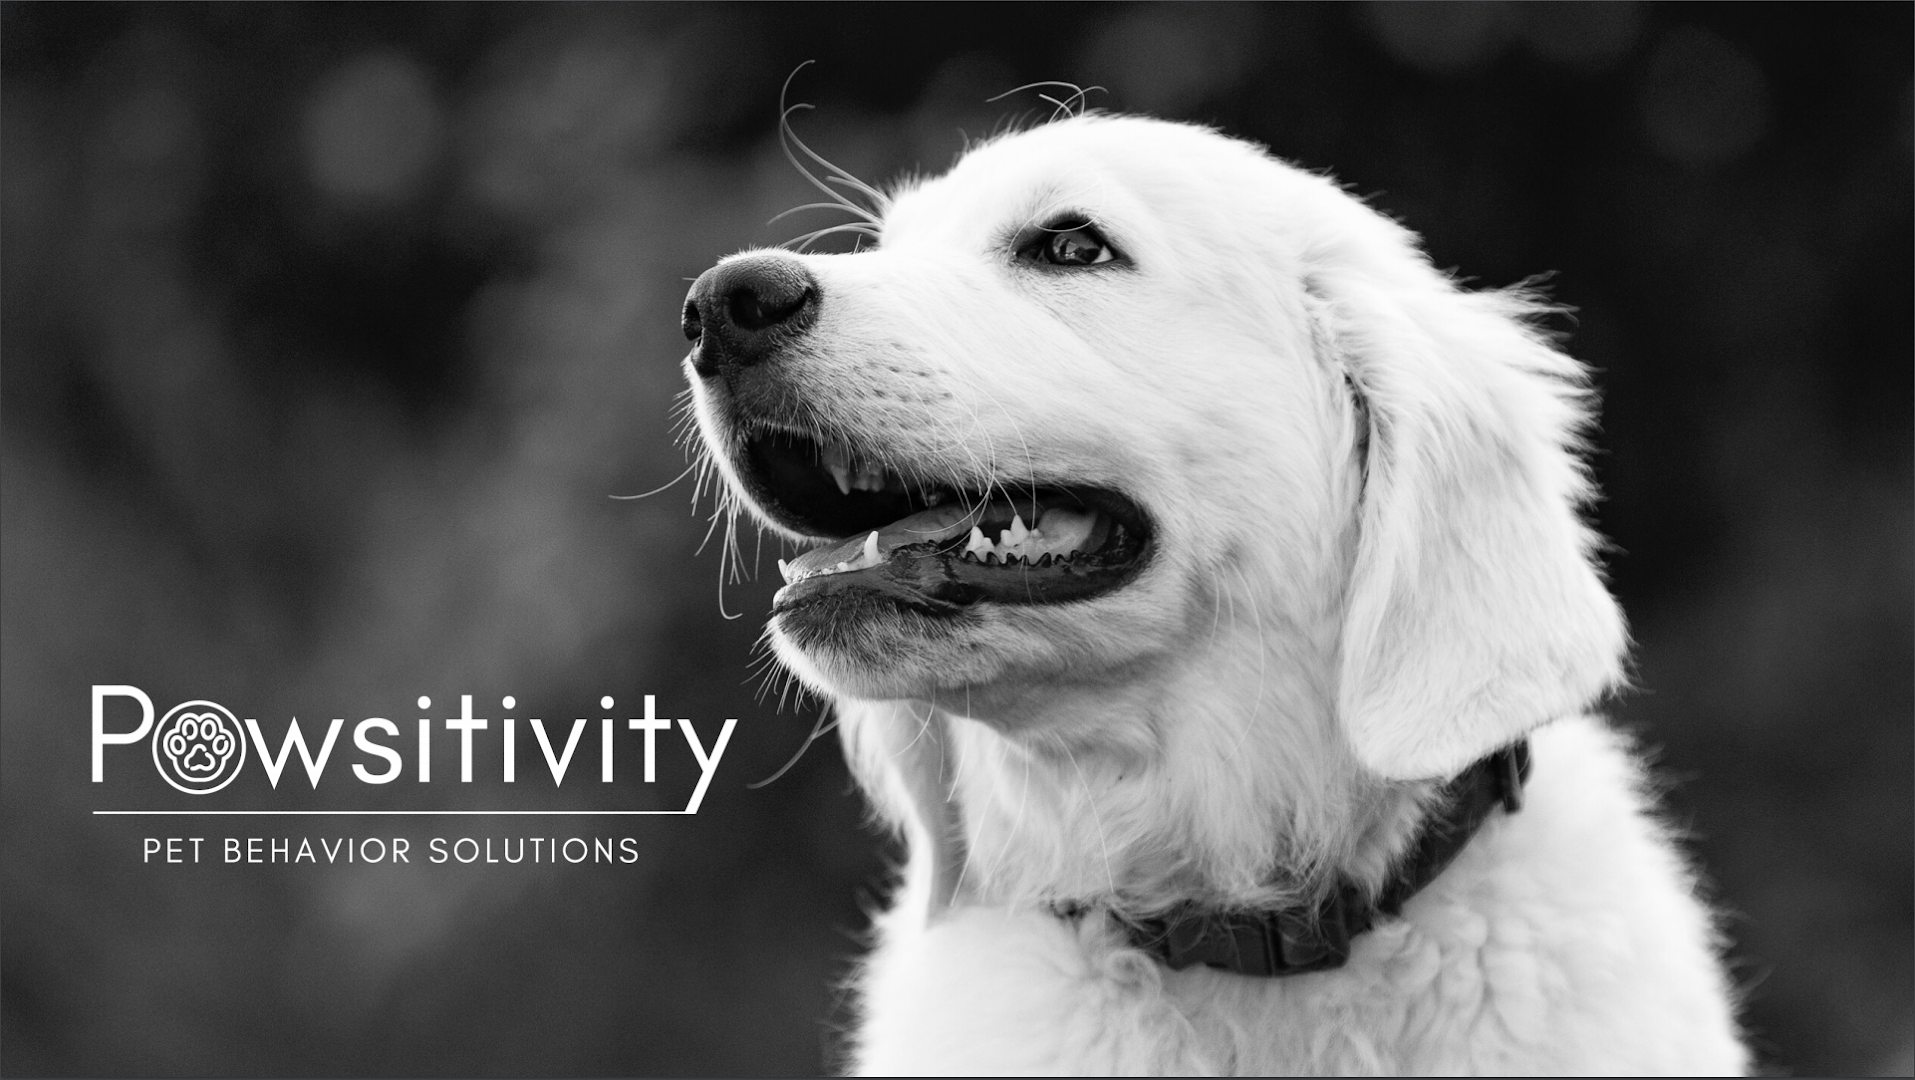 Pawsitivity Pet Behavior Solutions